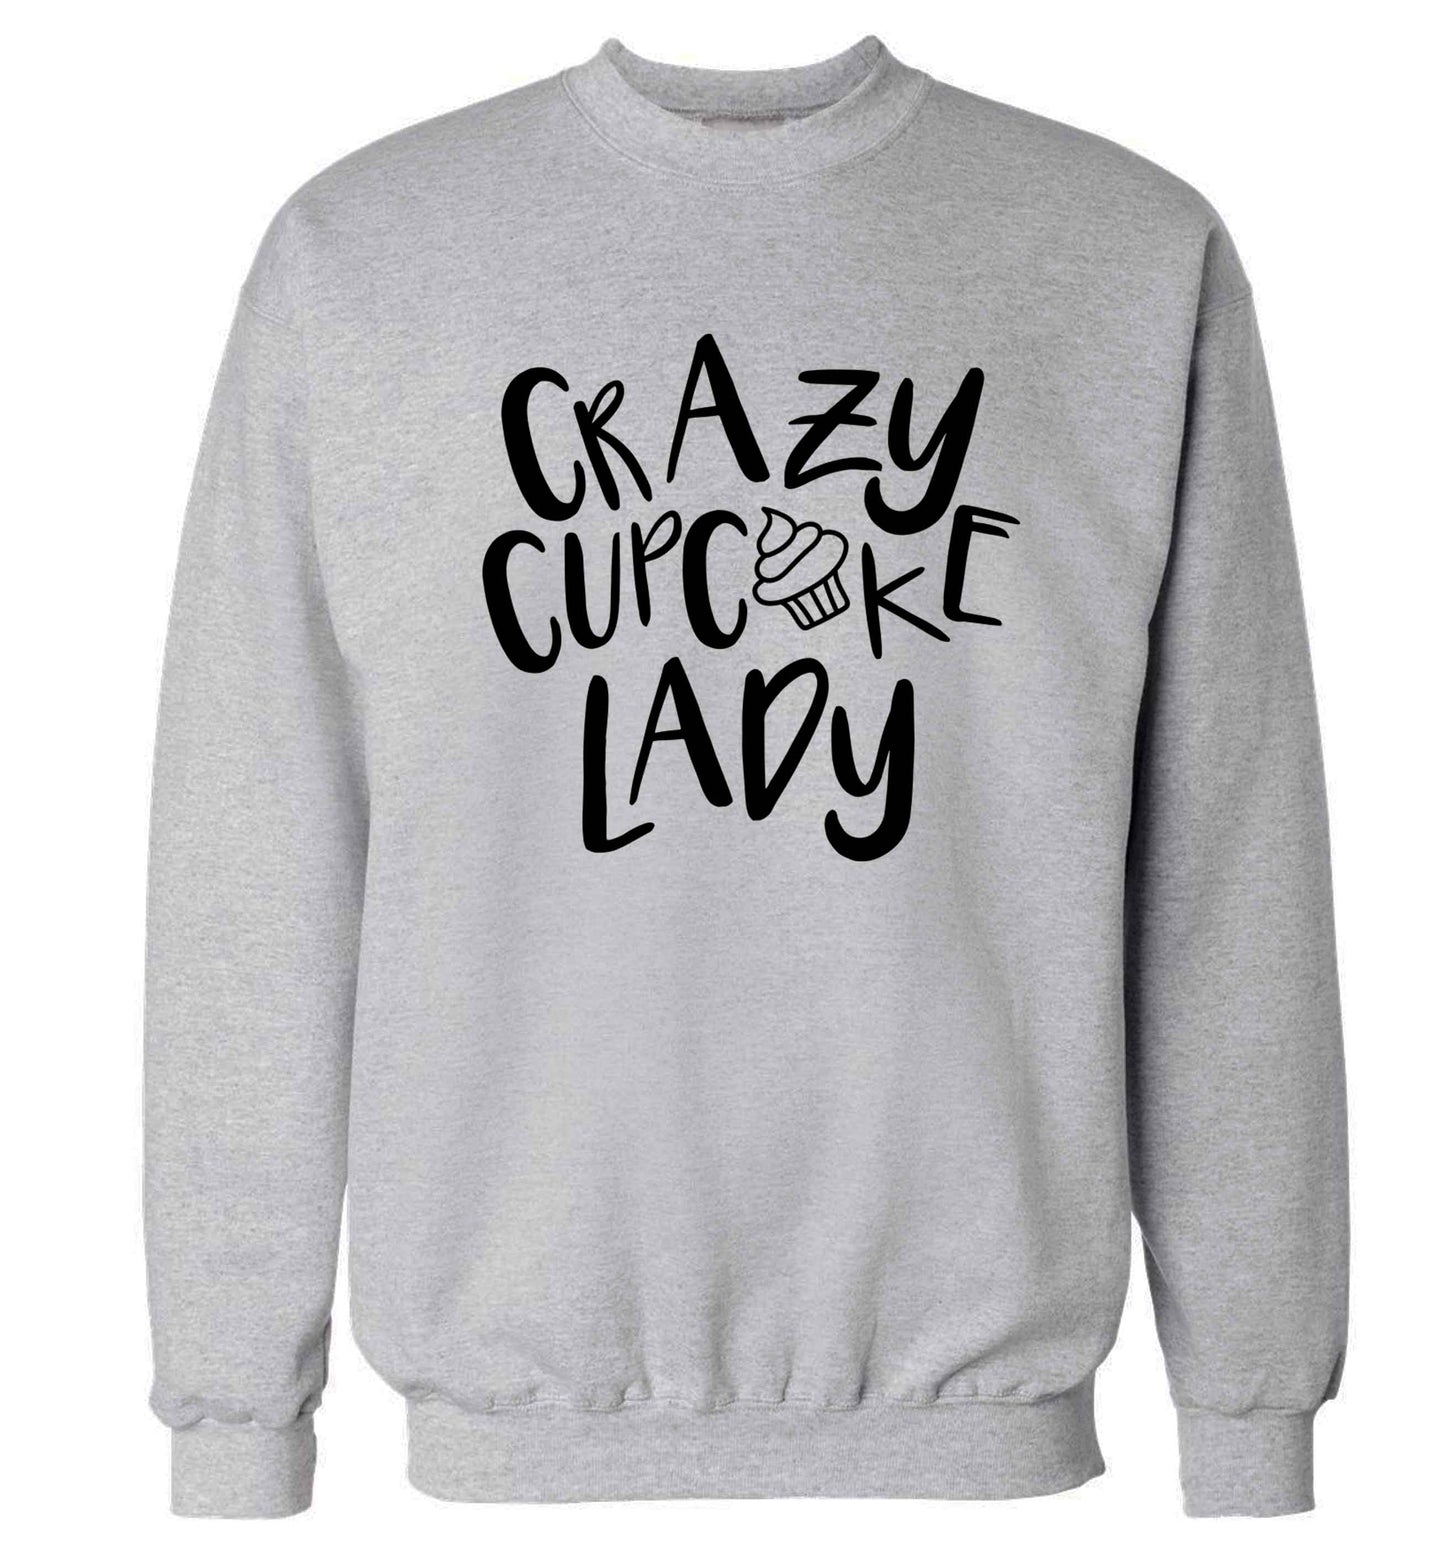 Crazy cupcake lady Adult's unisex grey Sweater 2XL